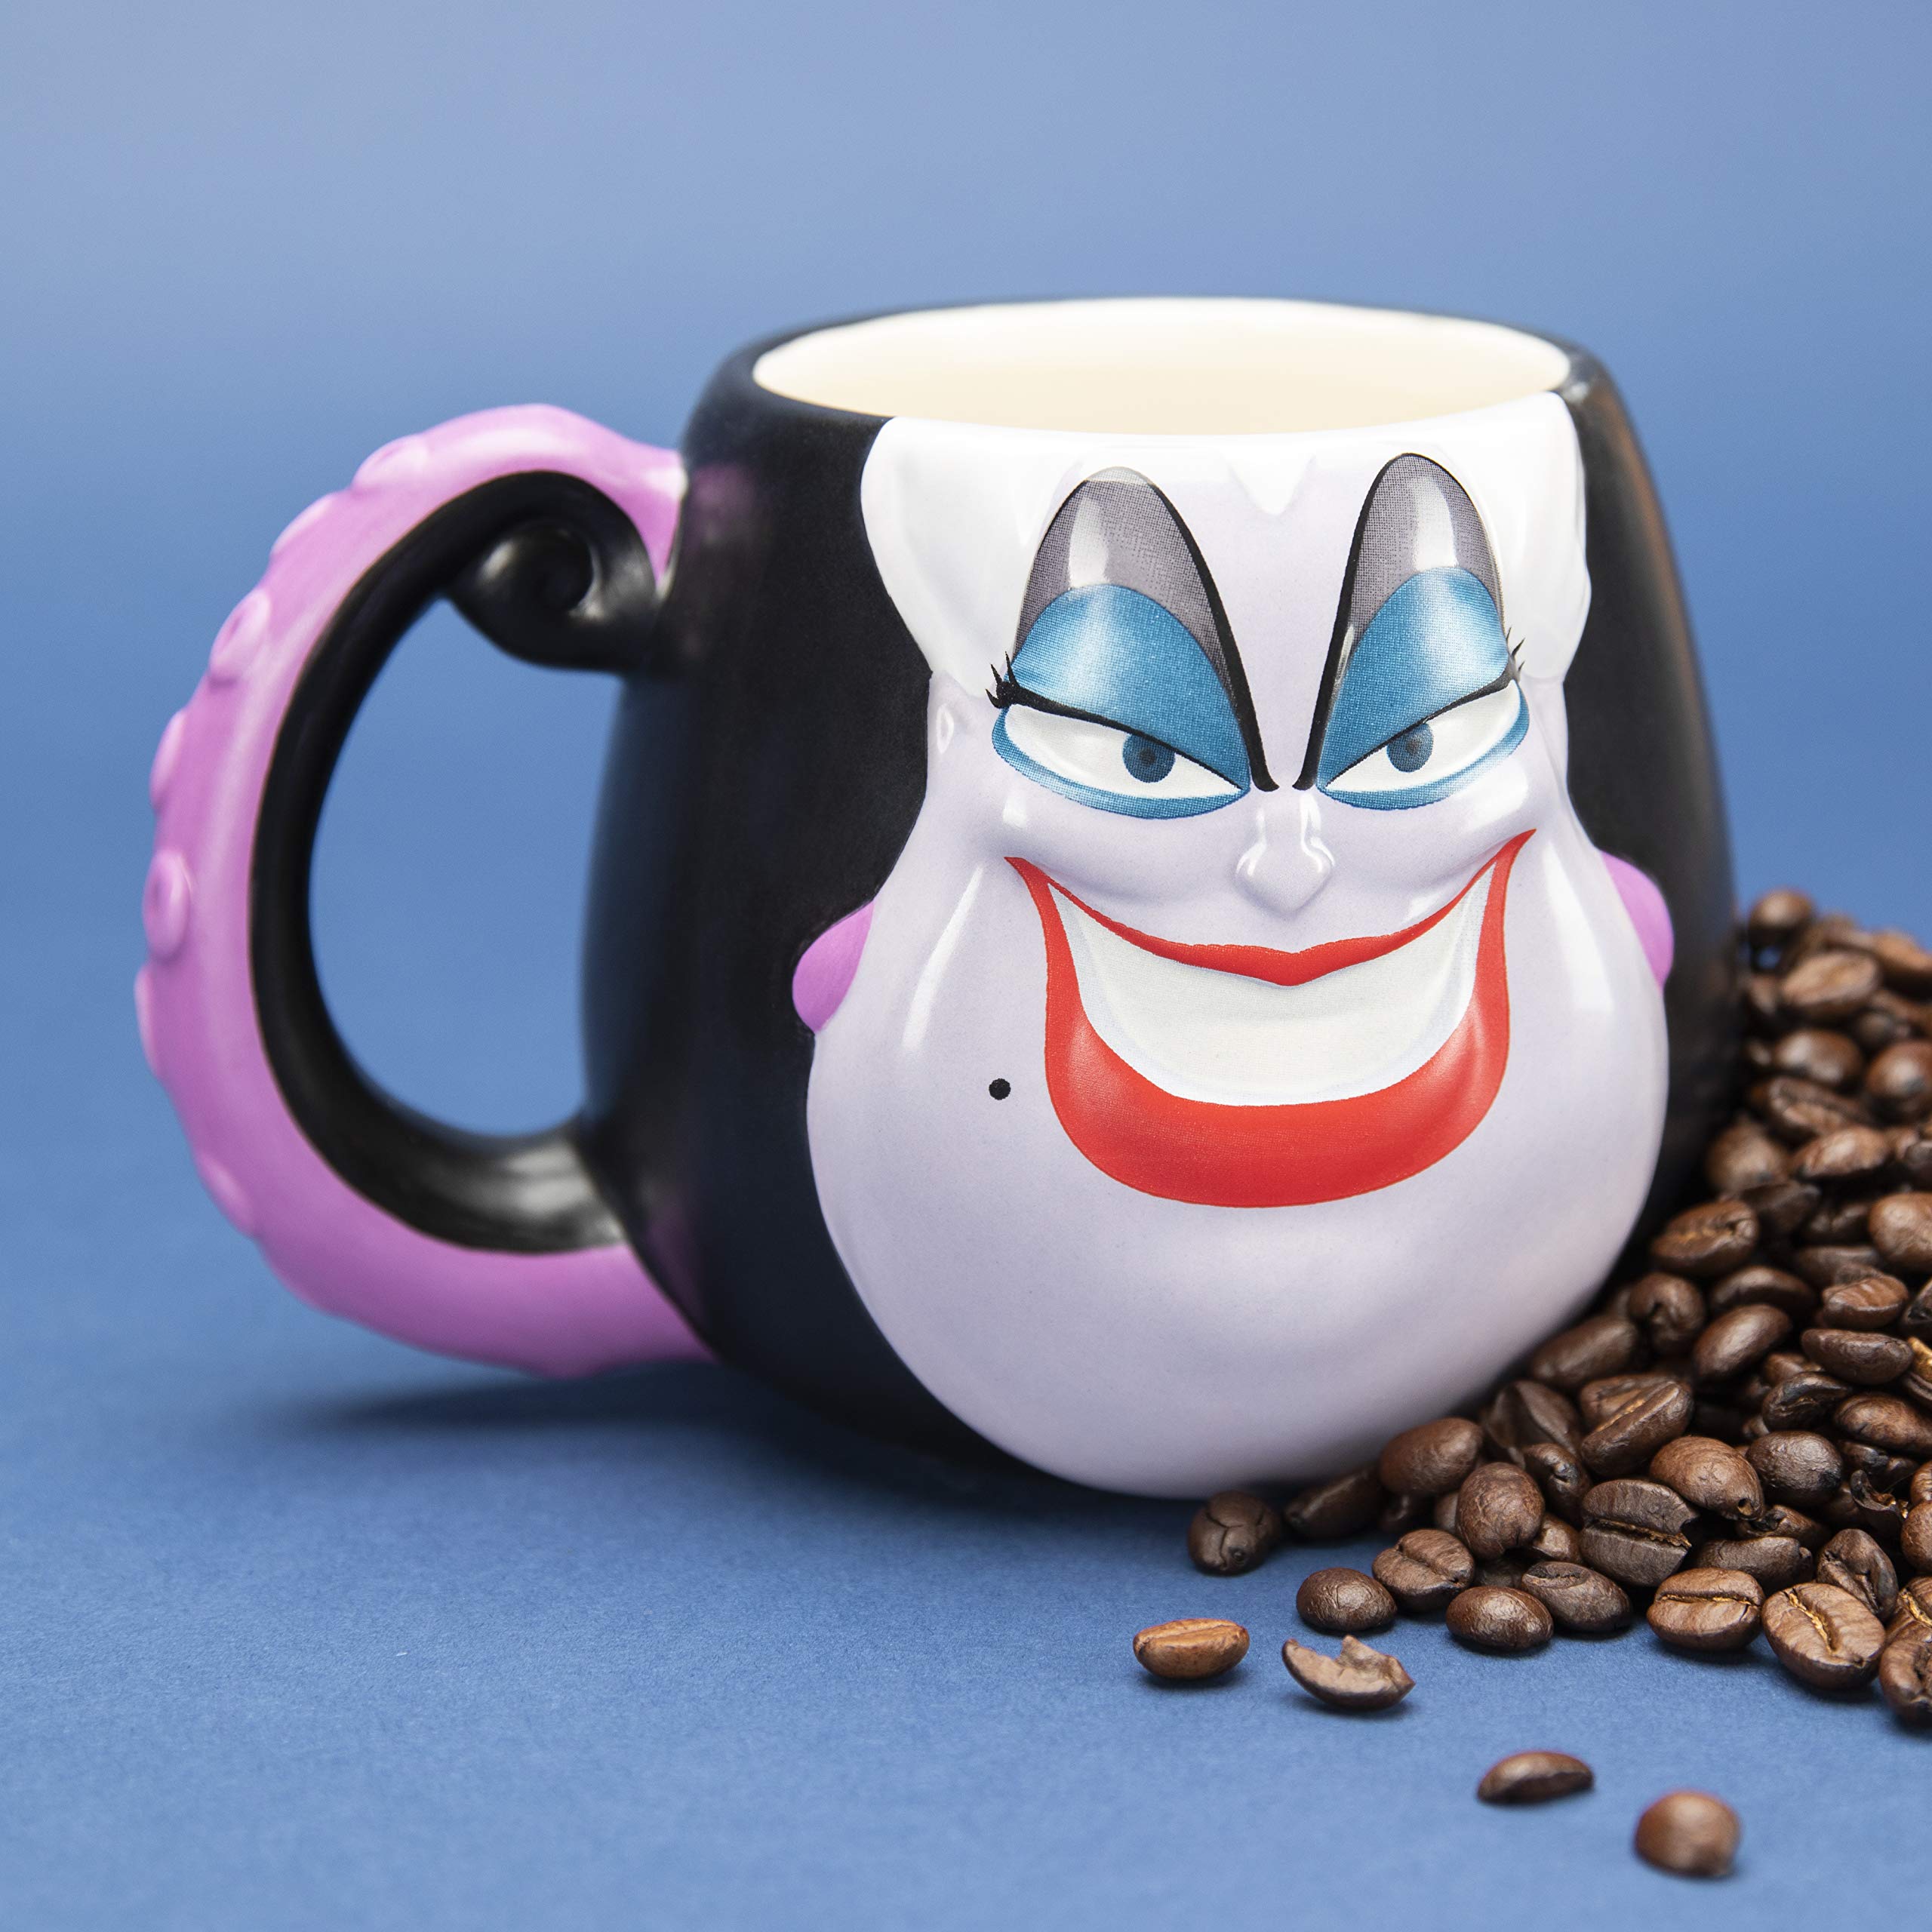 Paladone Ursula Mug - The Little Mermaid Ceramic Coffee Mug - Officially Licensed Disney,500 milliliters